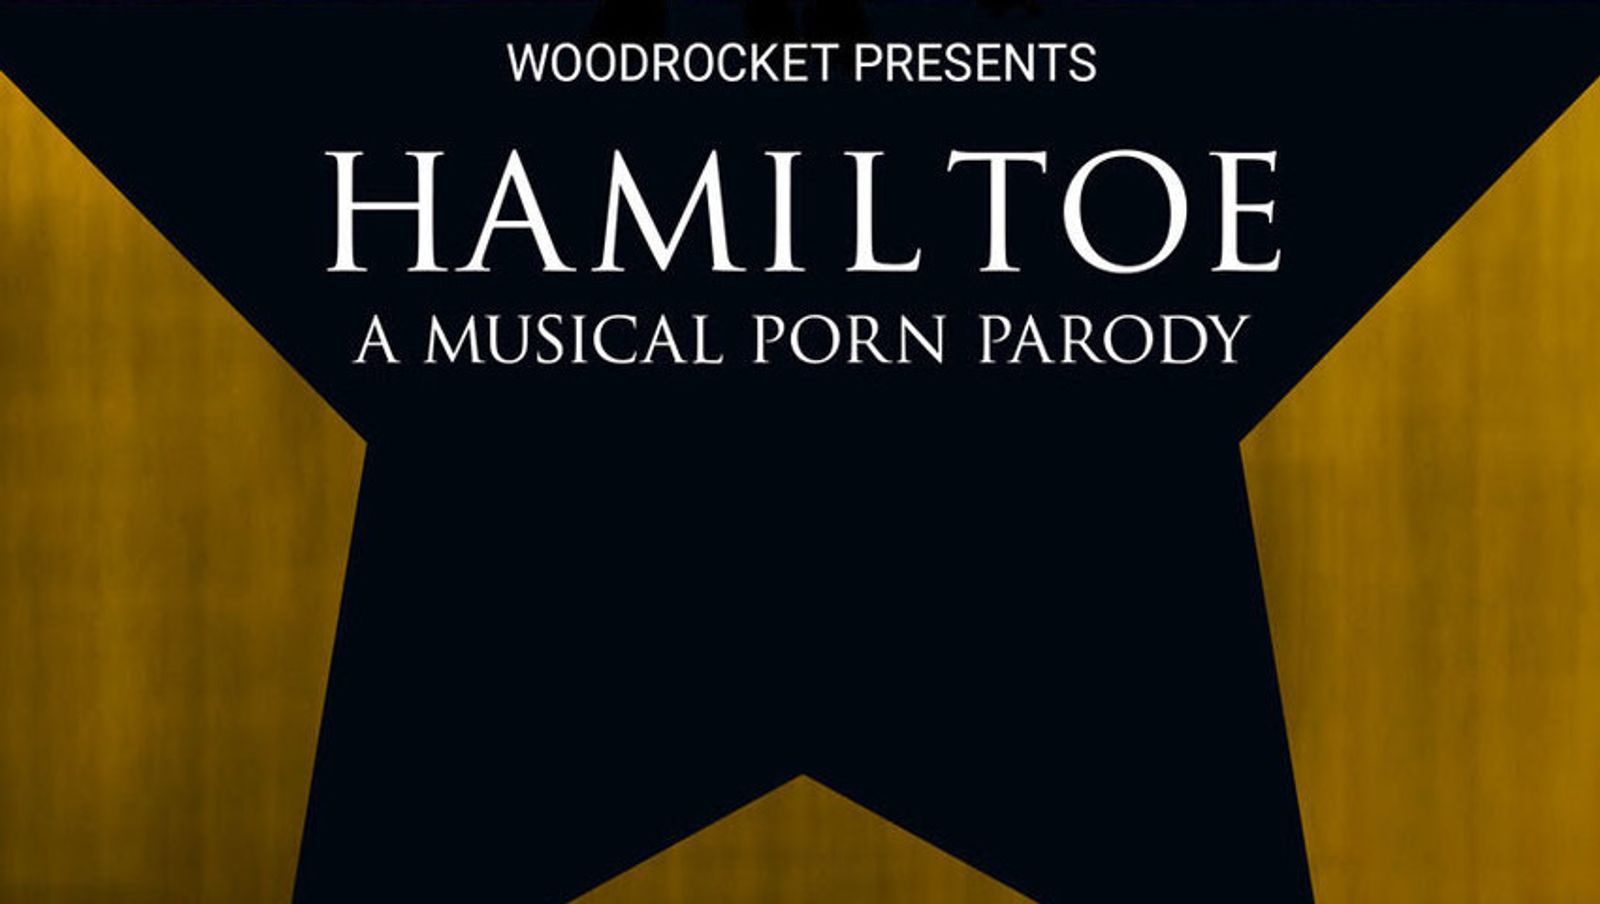 WoodRocket Announces 'Hamiltoe' Musical Porn Parody